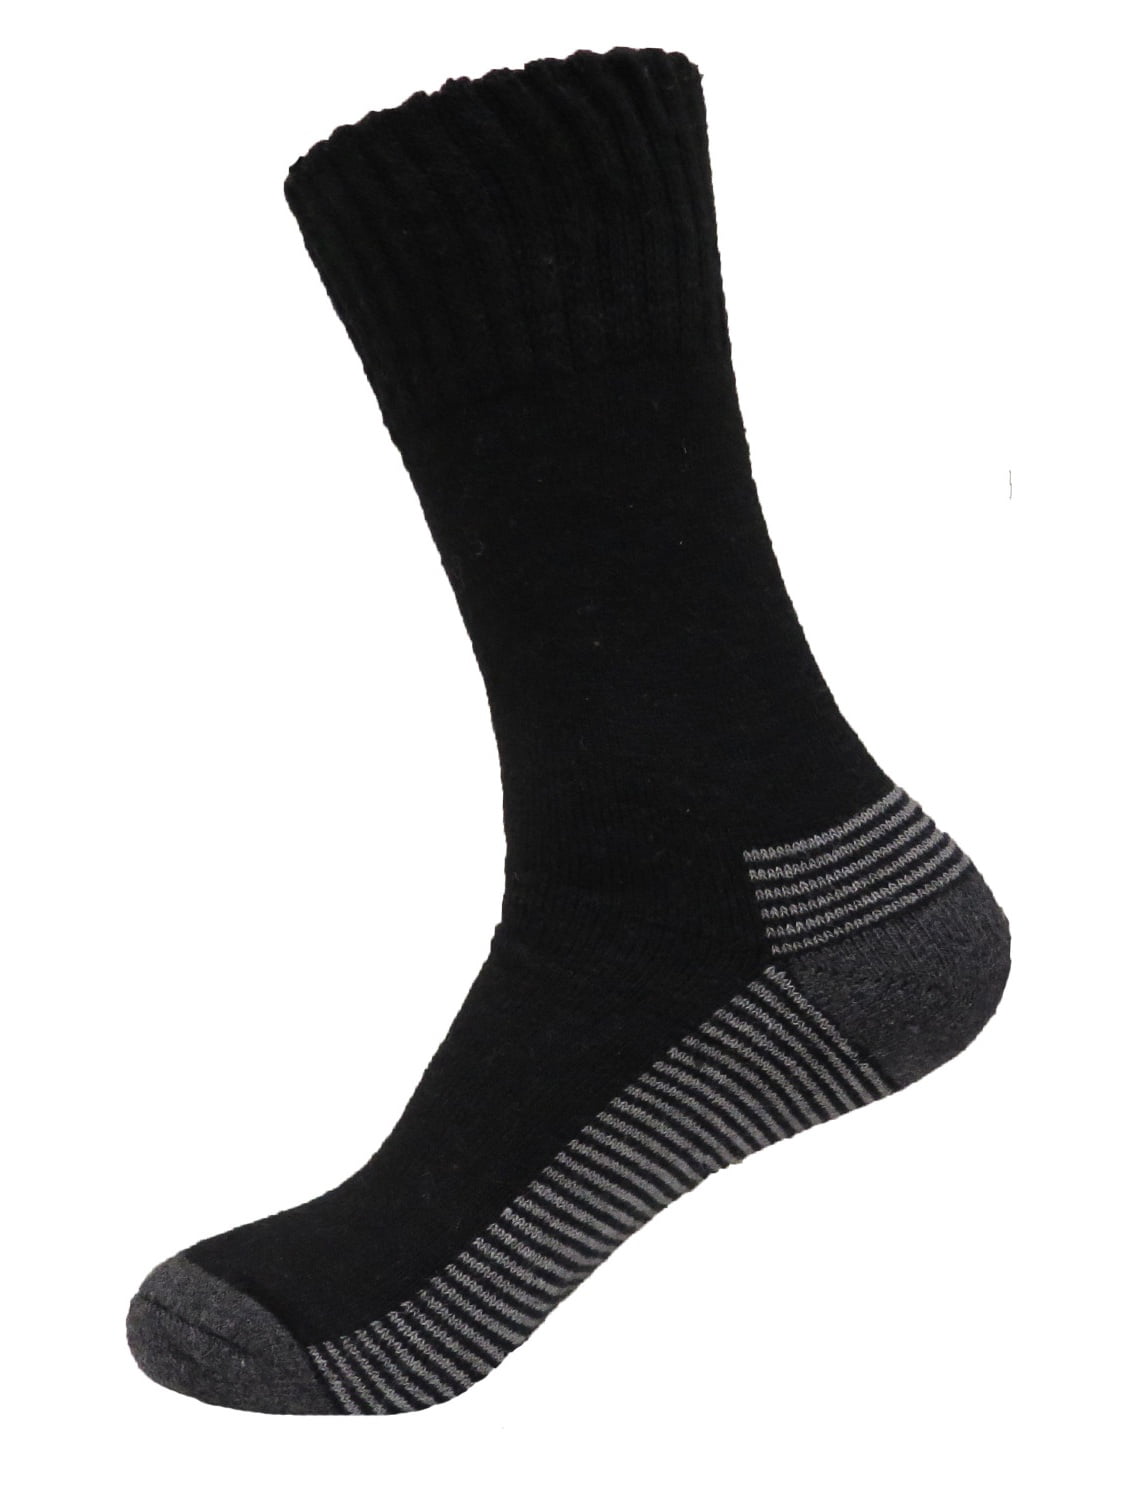 Georgia Boot Merino Wool Low-Cut Socks Made In USA Shoe 9-12 3 pair 